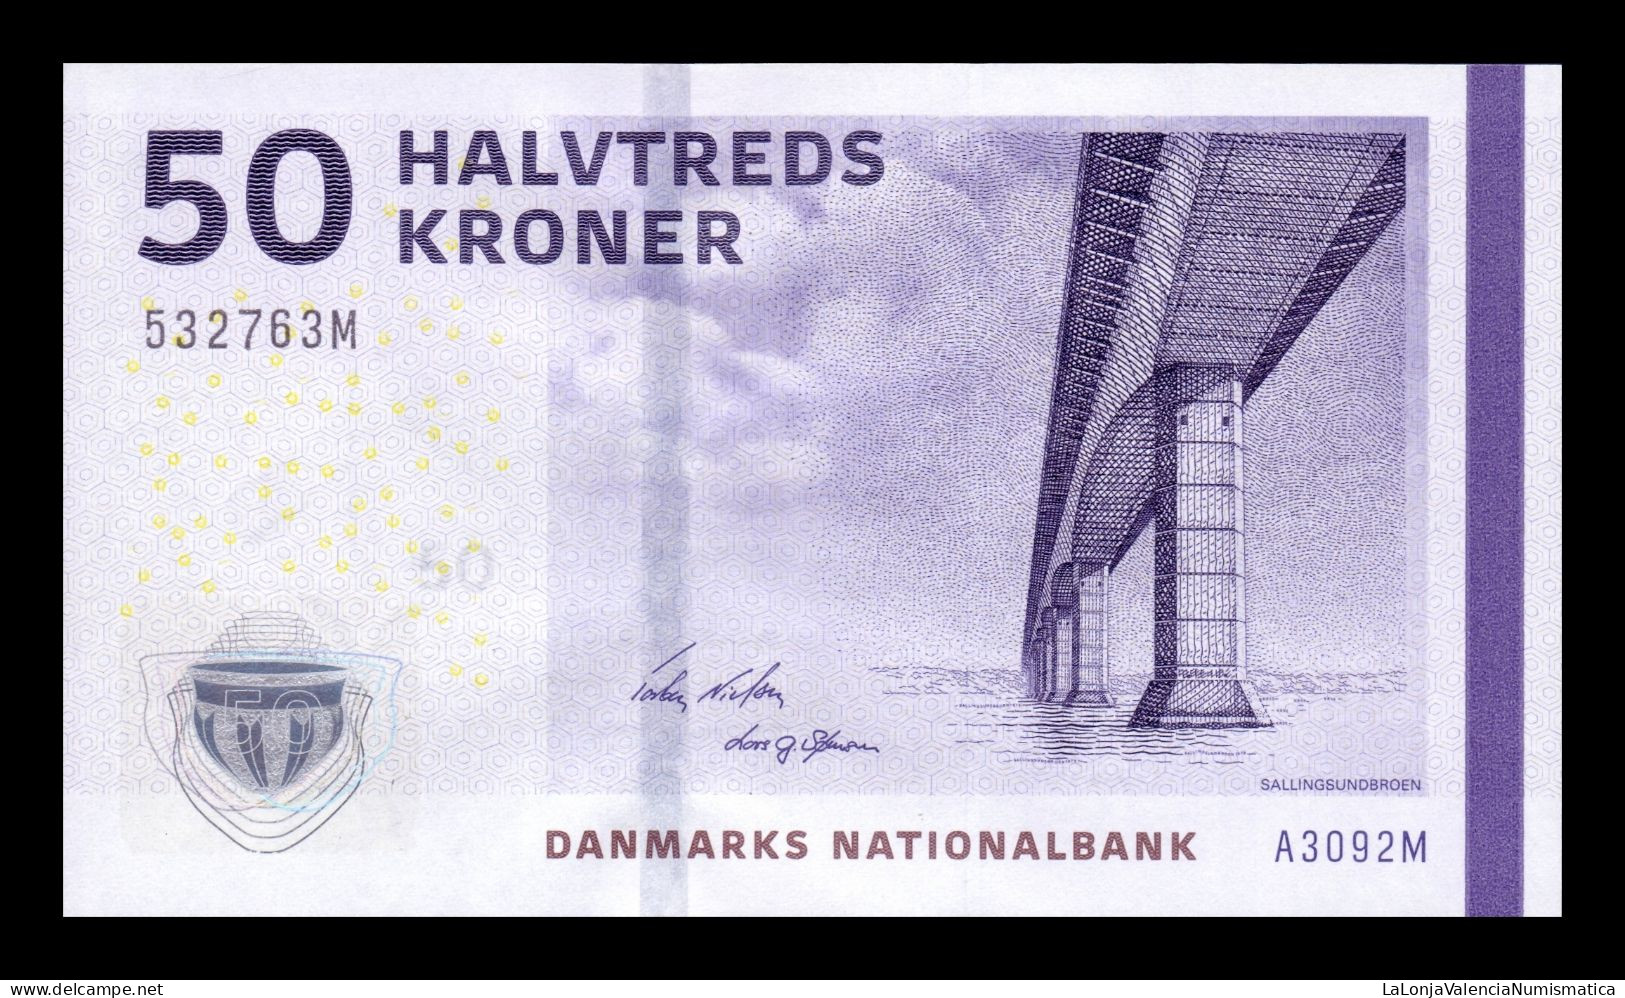 Dinamarca Denmark 50 Kroner 2009 Pick 65a(3) Sc Unc - Denmark